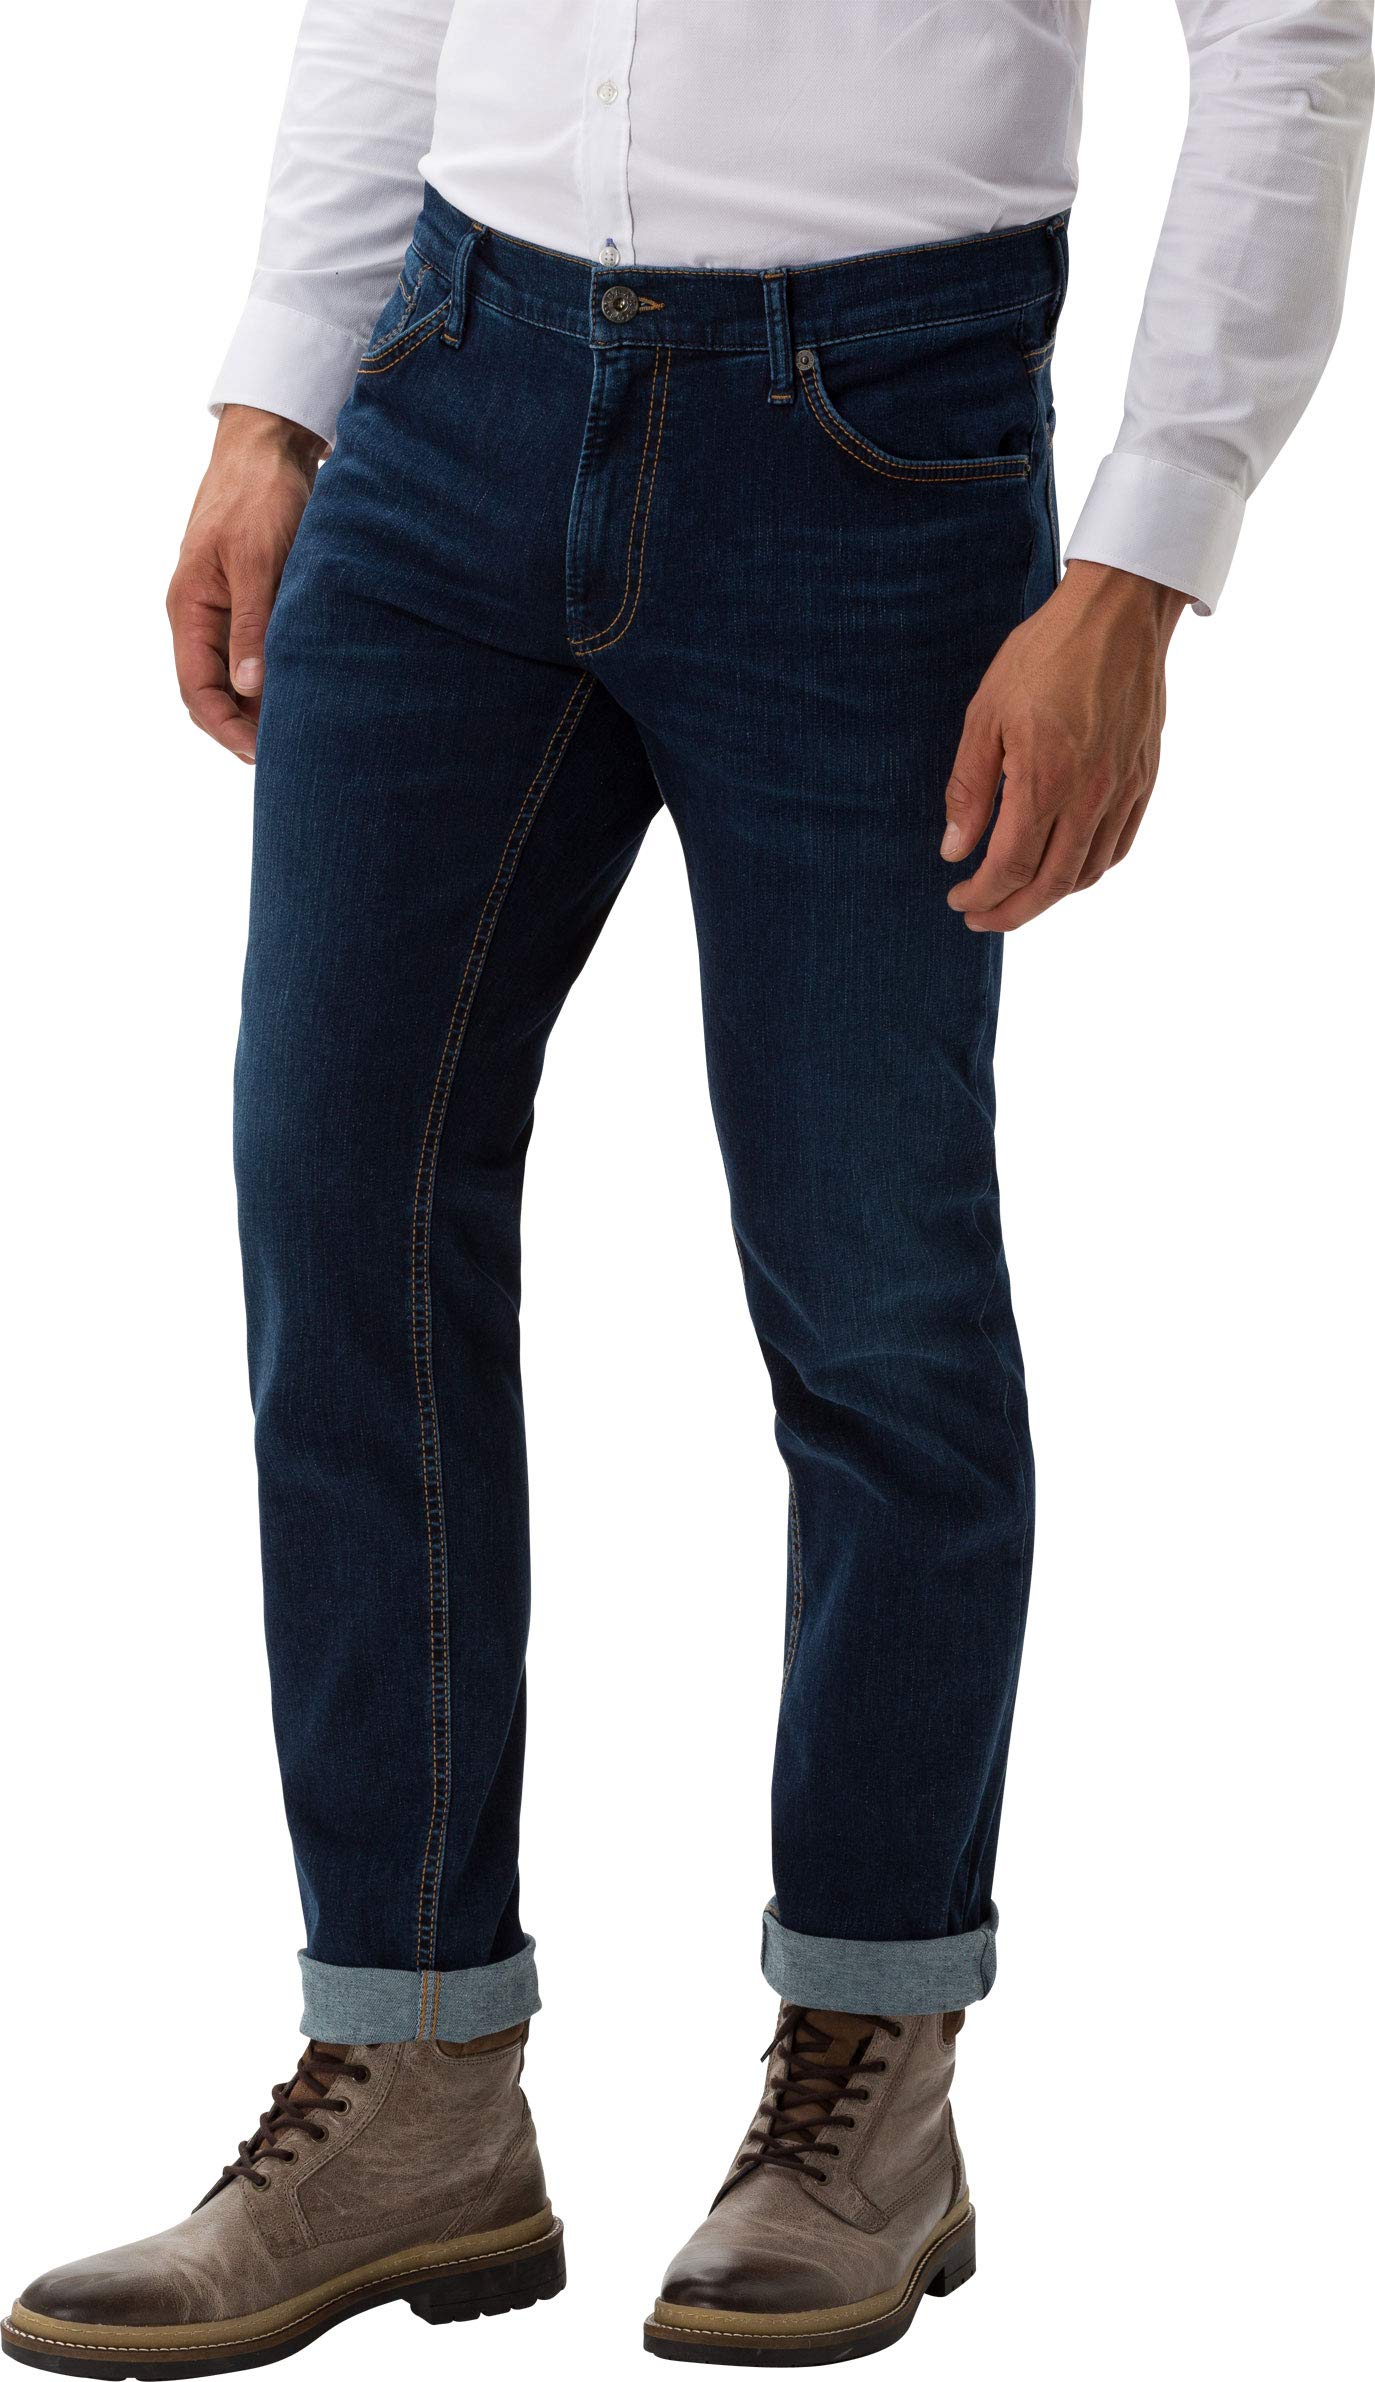 BRAX Herren Slim Fit Jeans Hose Style Chuck Hi-Flex Stretch Baumwolle, STONE BLUE USED, 36W / 32L